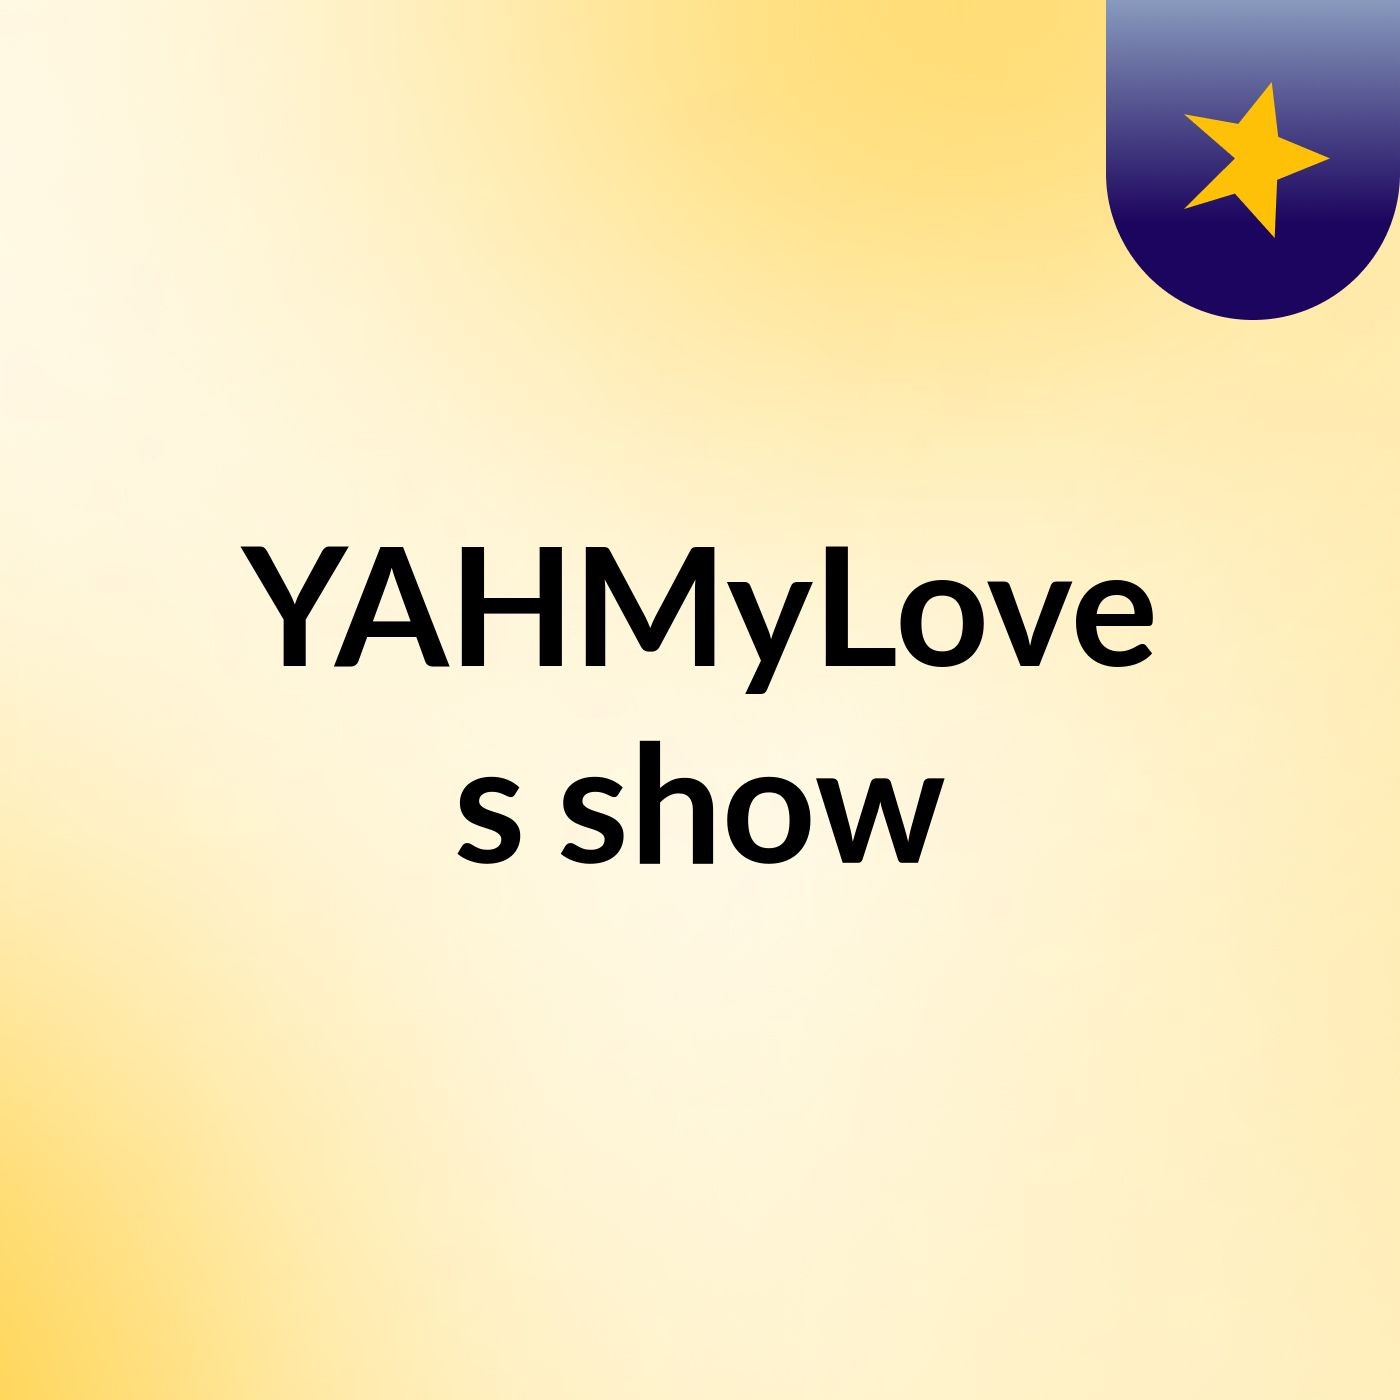 YAHMyLove's show